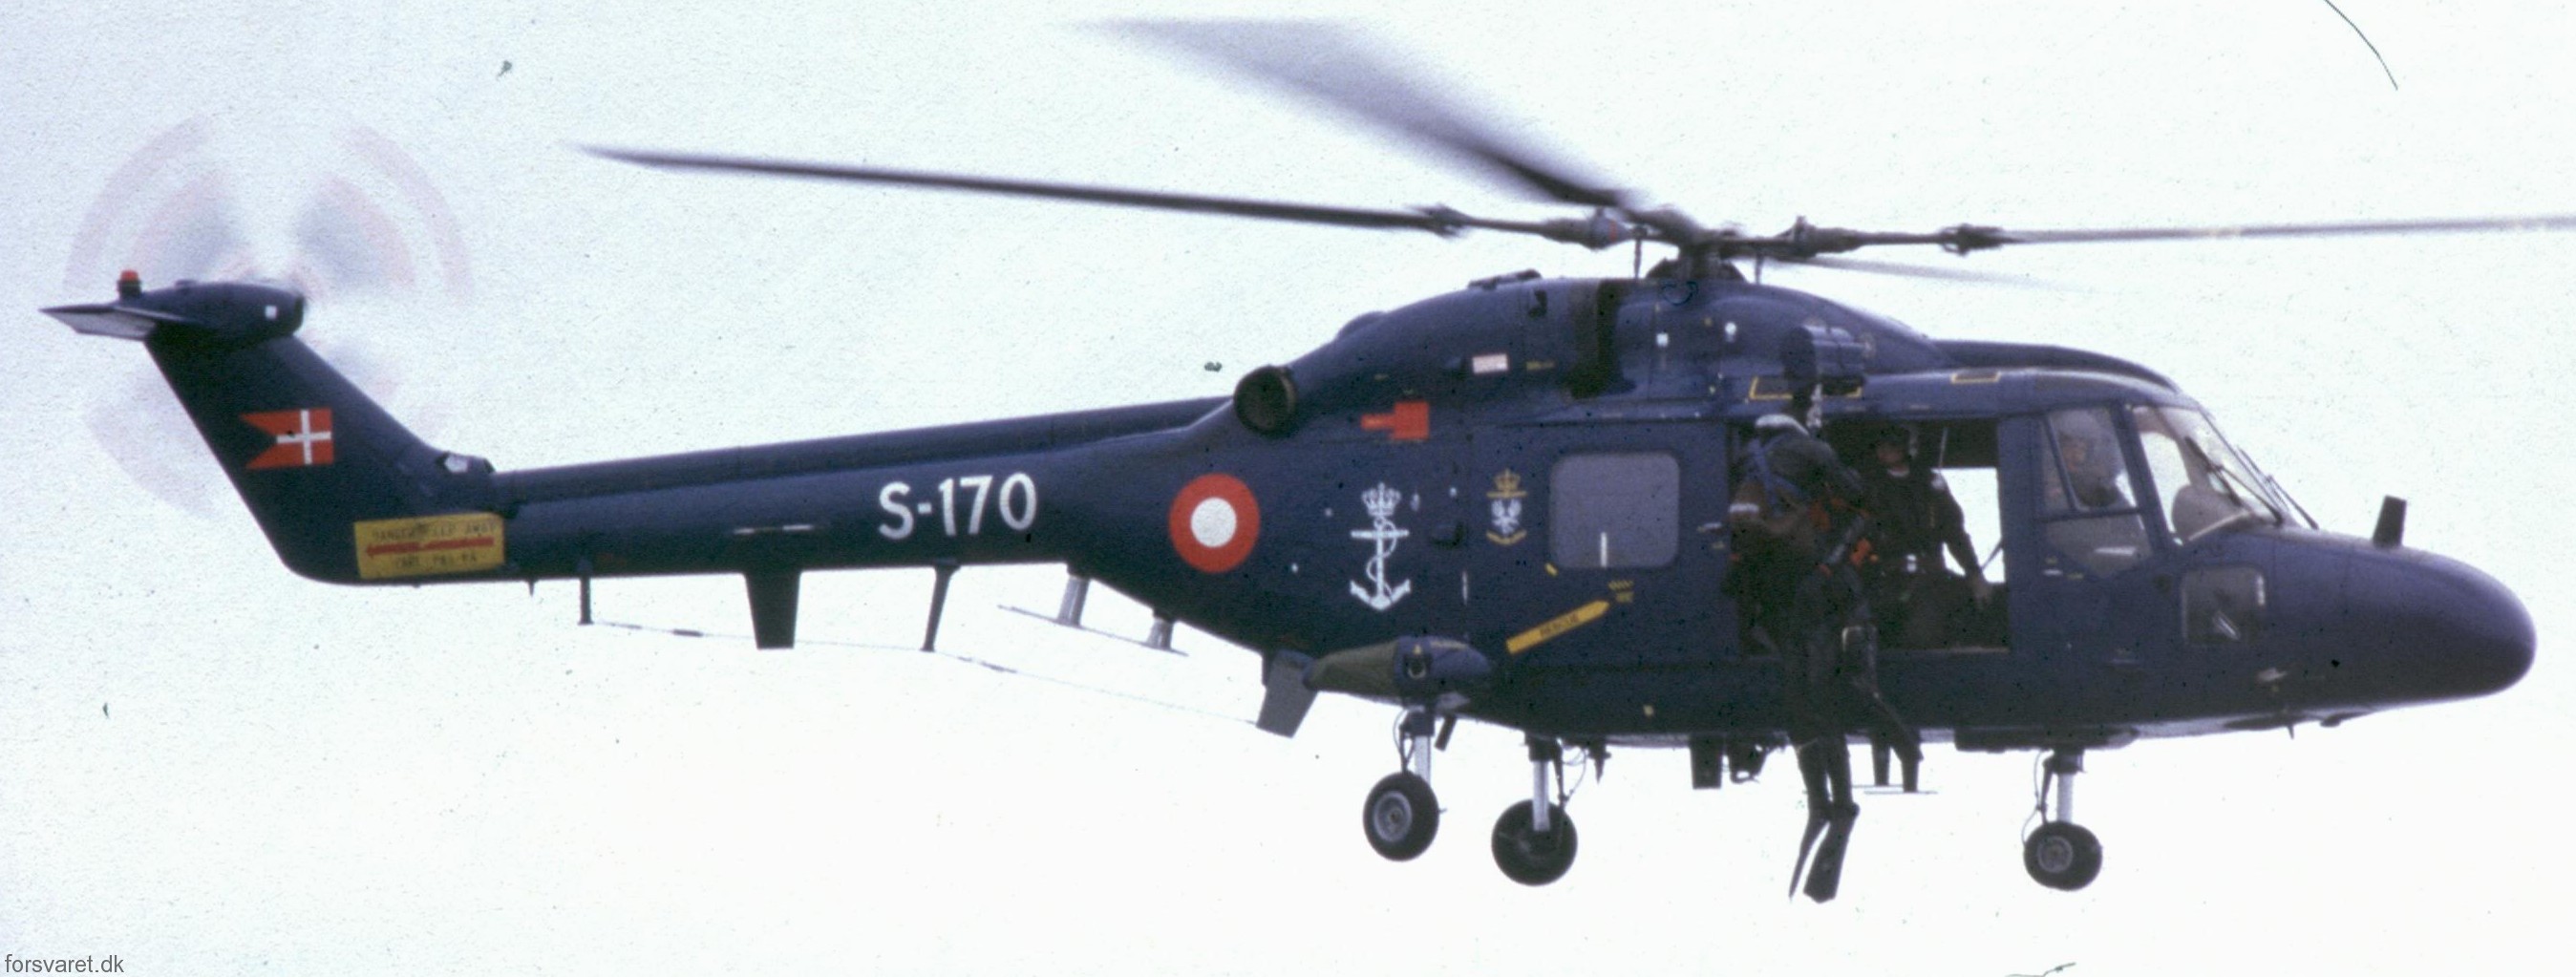 lynx mk.80 mk.90b helicopter westland royal danish navy air force kongelige danske marine flyvevabnet s-170 14